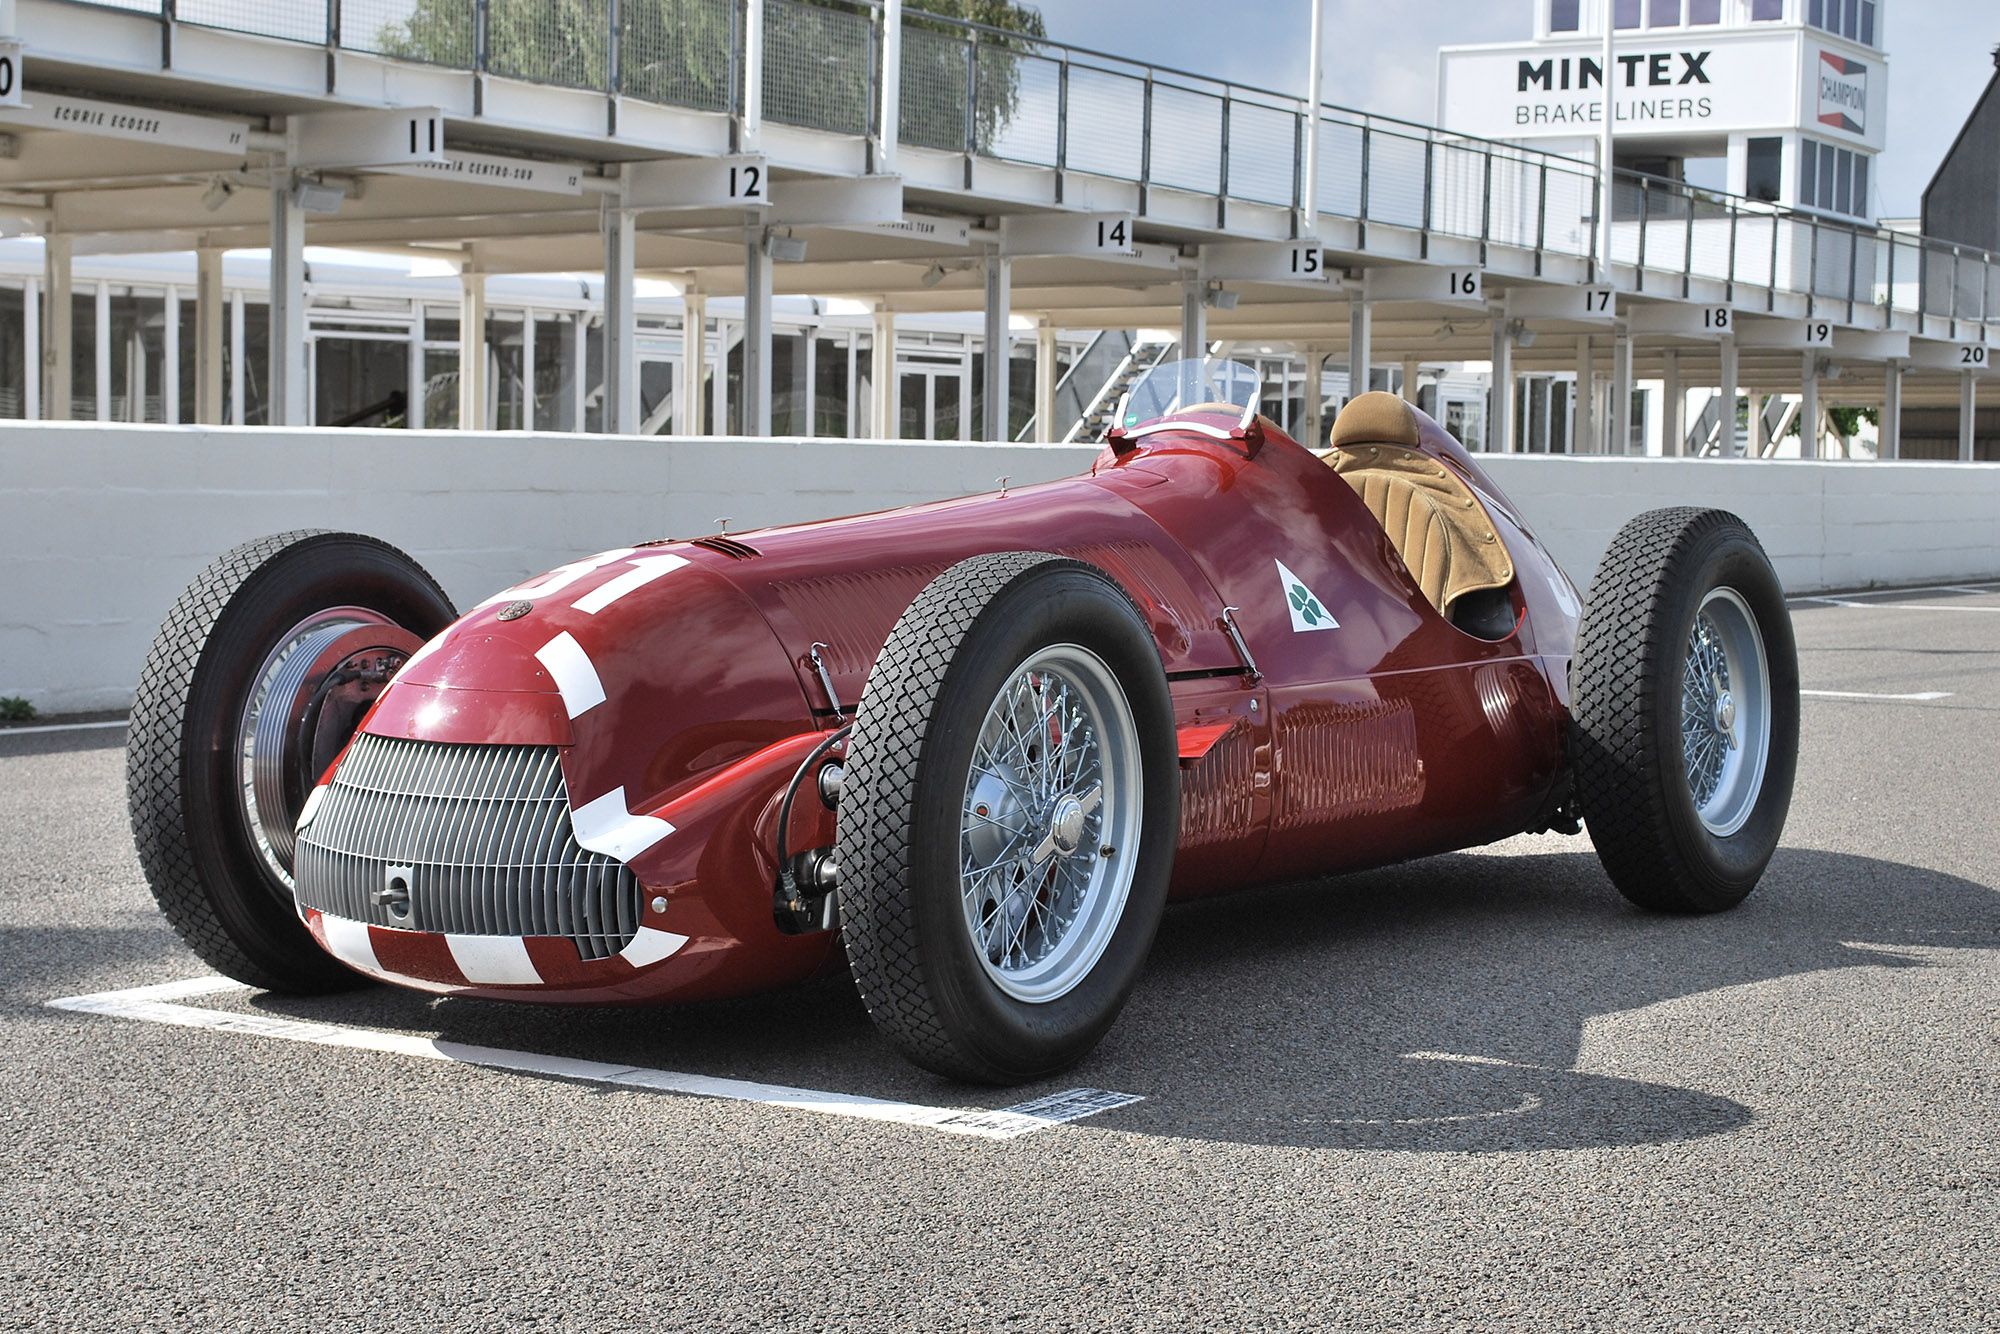 The Alfa 158 was an amazingly successful race car